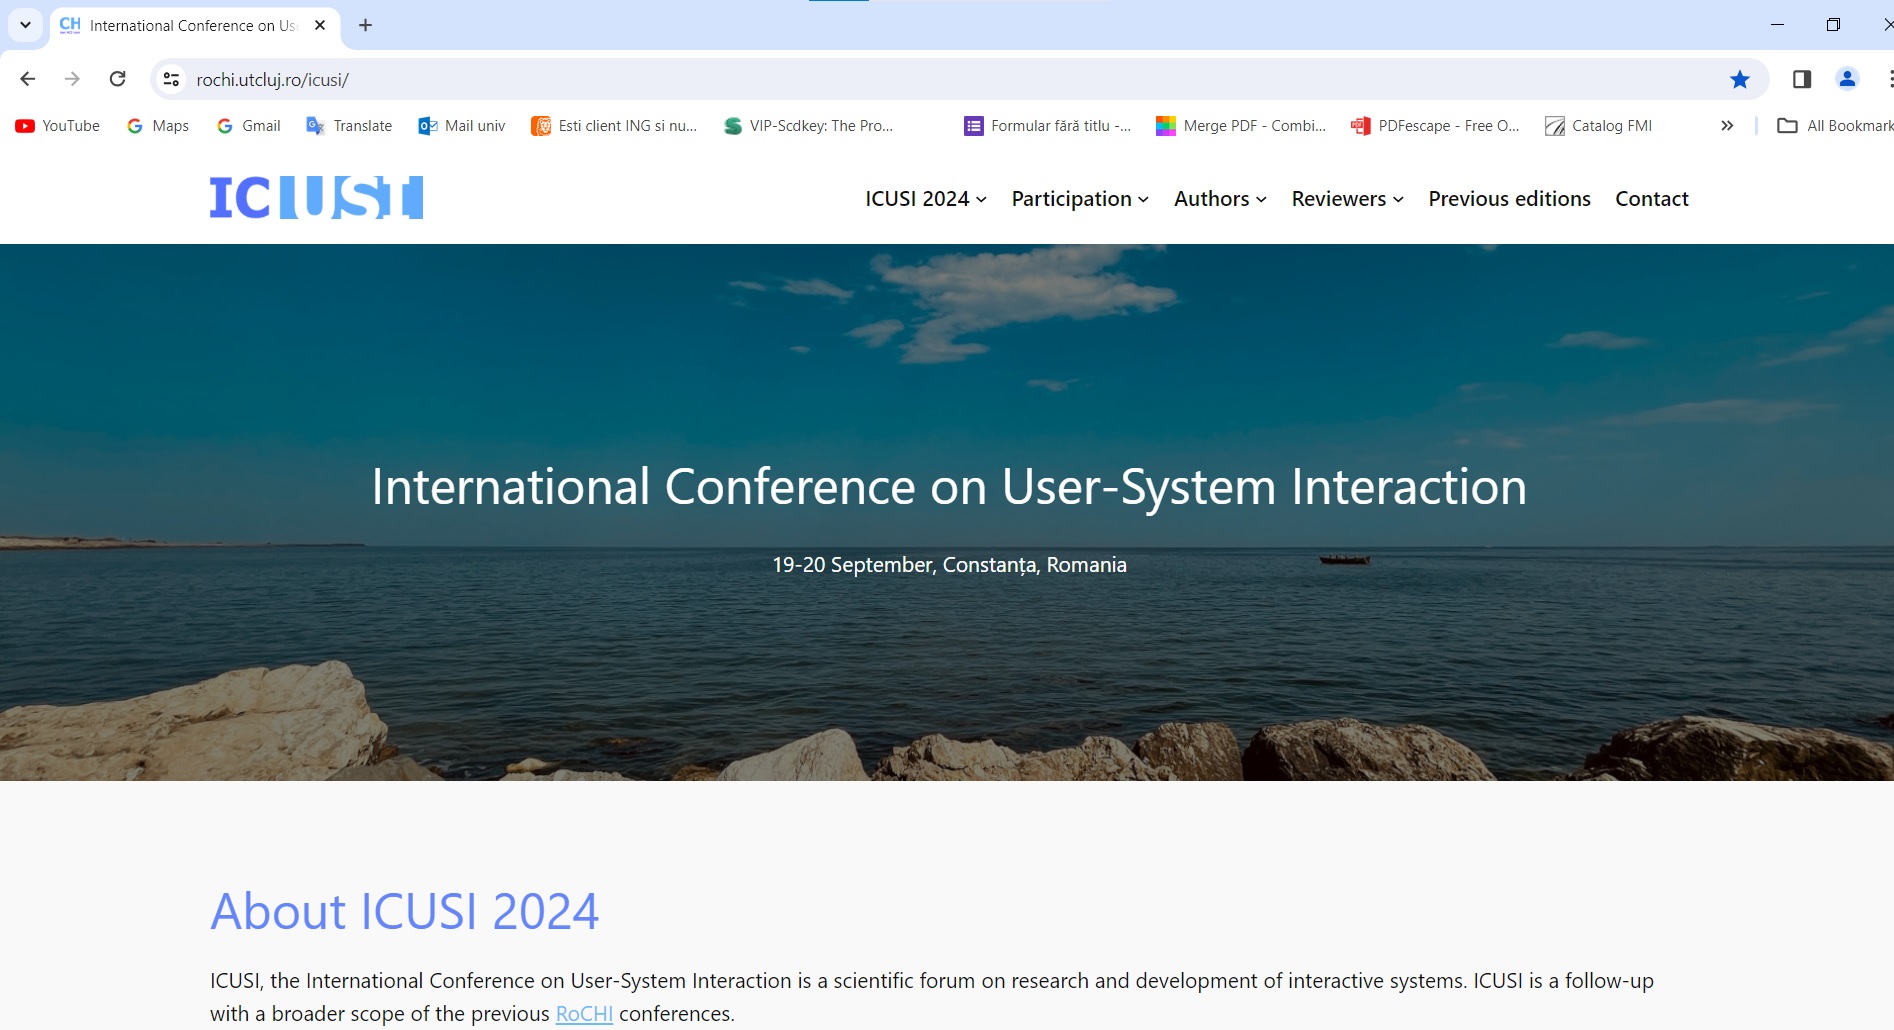 International Conference on User-System Interaction - ICUSI 2024, Constanta, Sud-Est, Romania